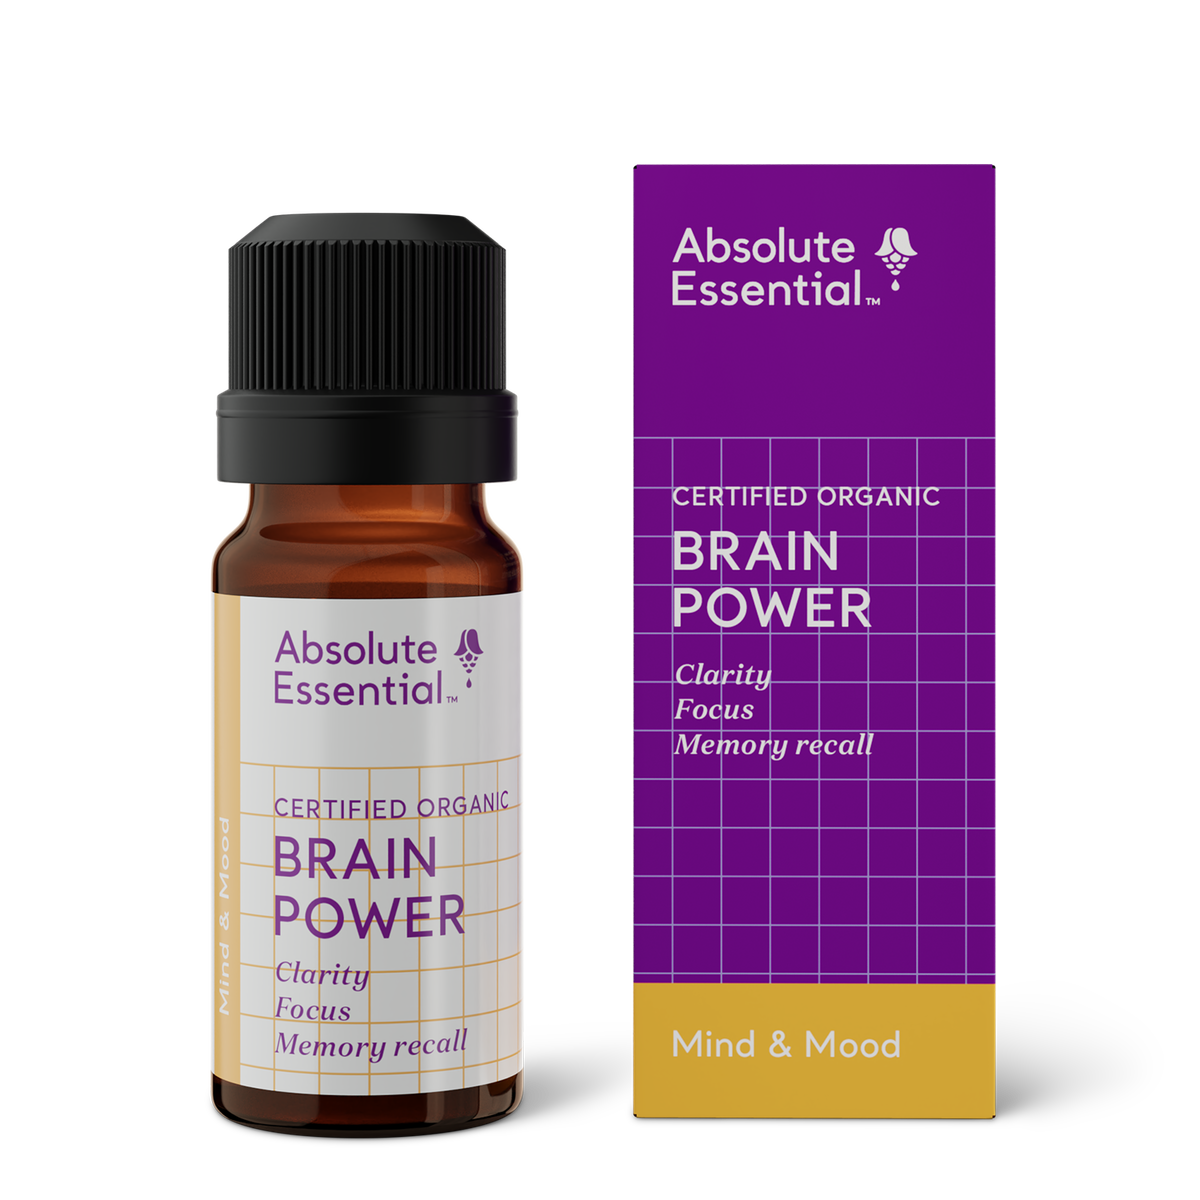 Absolute Essential Brain Power Oil